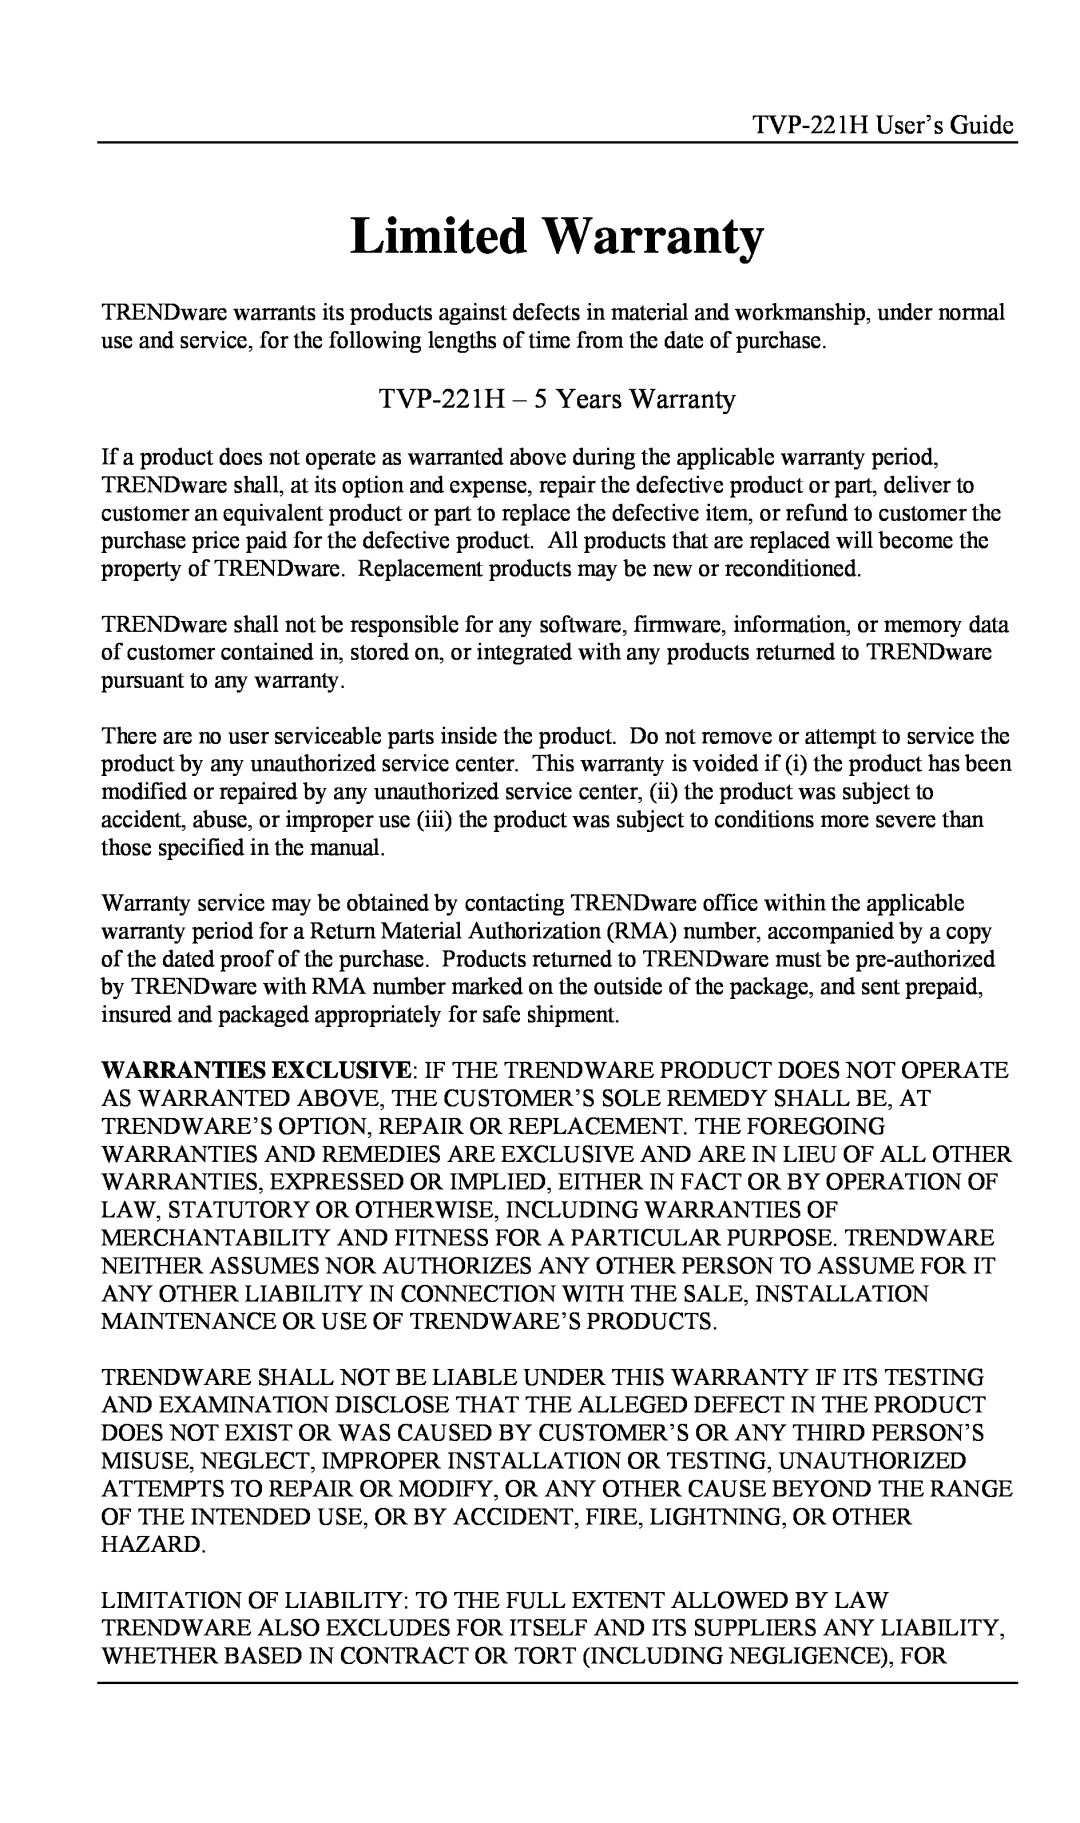 TRENDnet TVP- 221H, VoIP Gateway manual Limited Warranty, TVP-221H - 5 Years Warranty 